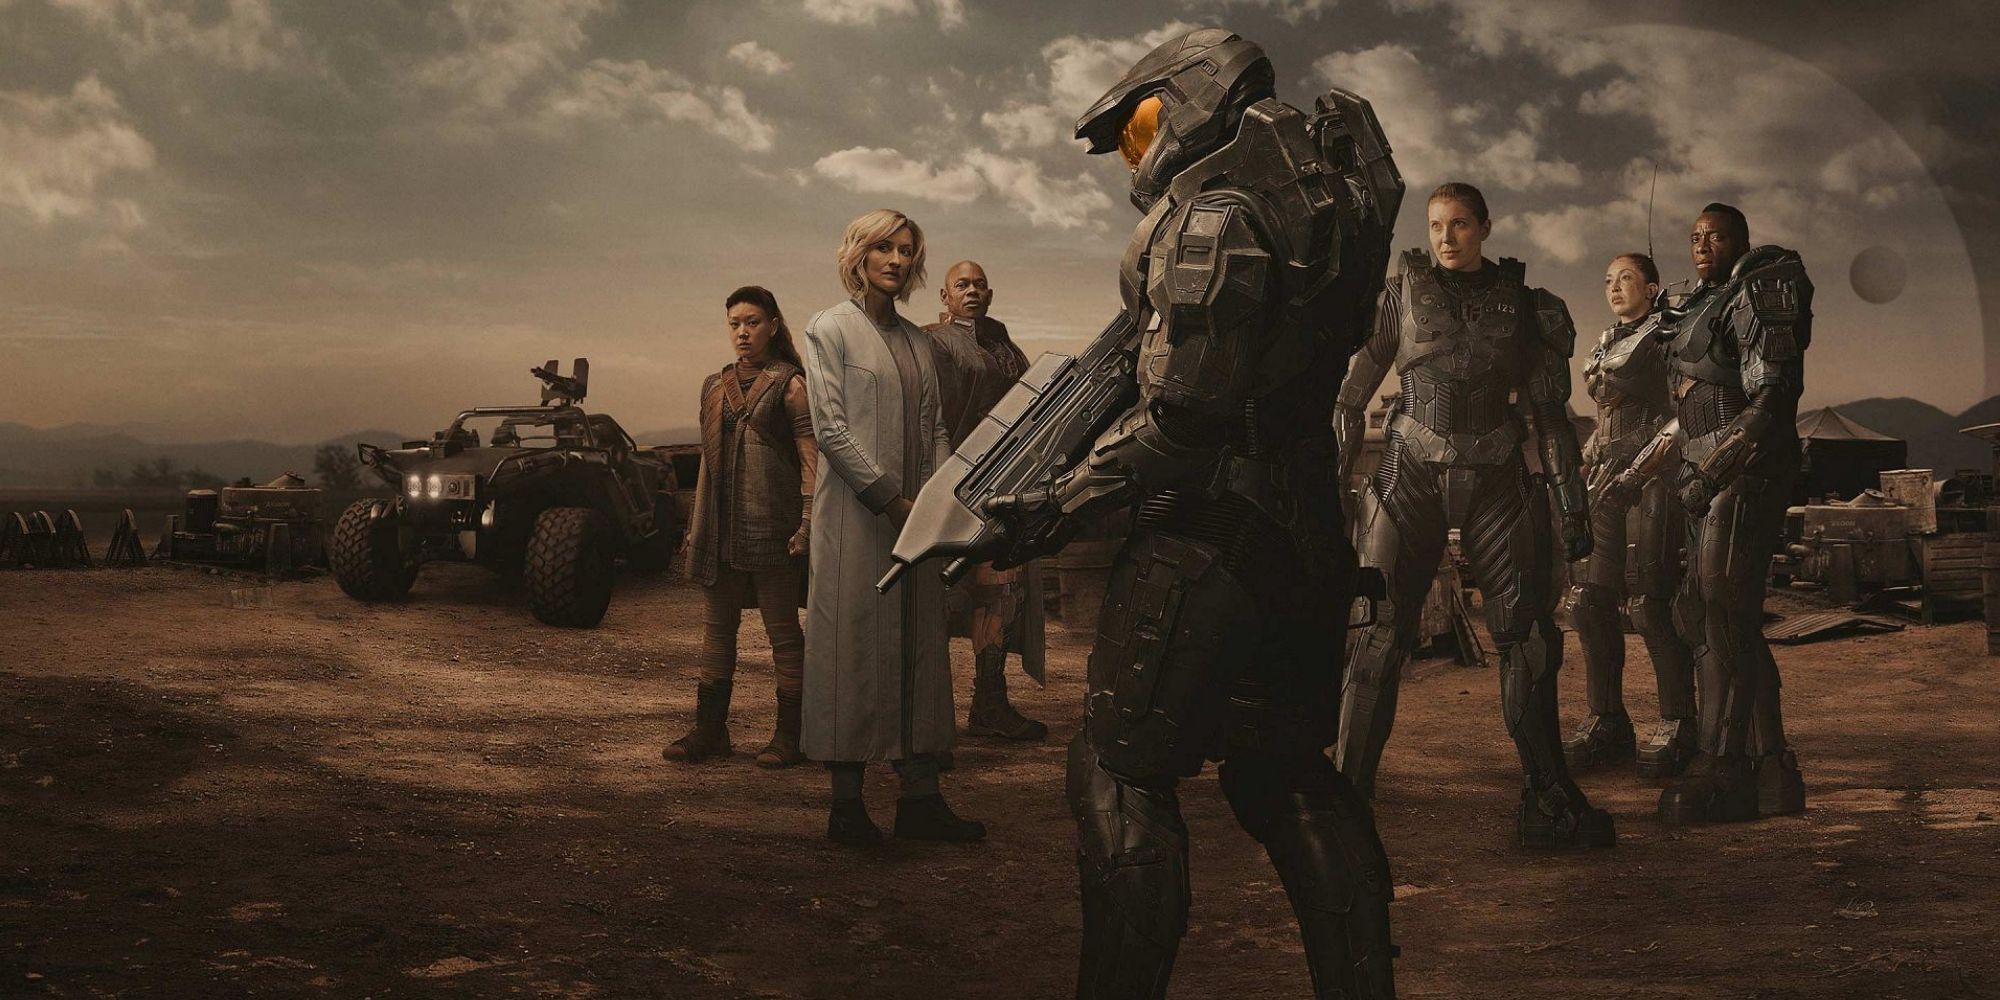 Papel de parede promocional do elenco de 'Halo' 